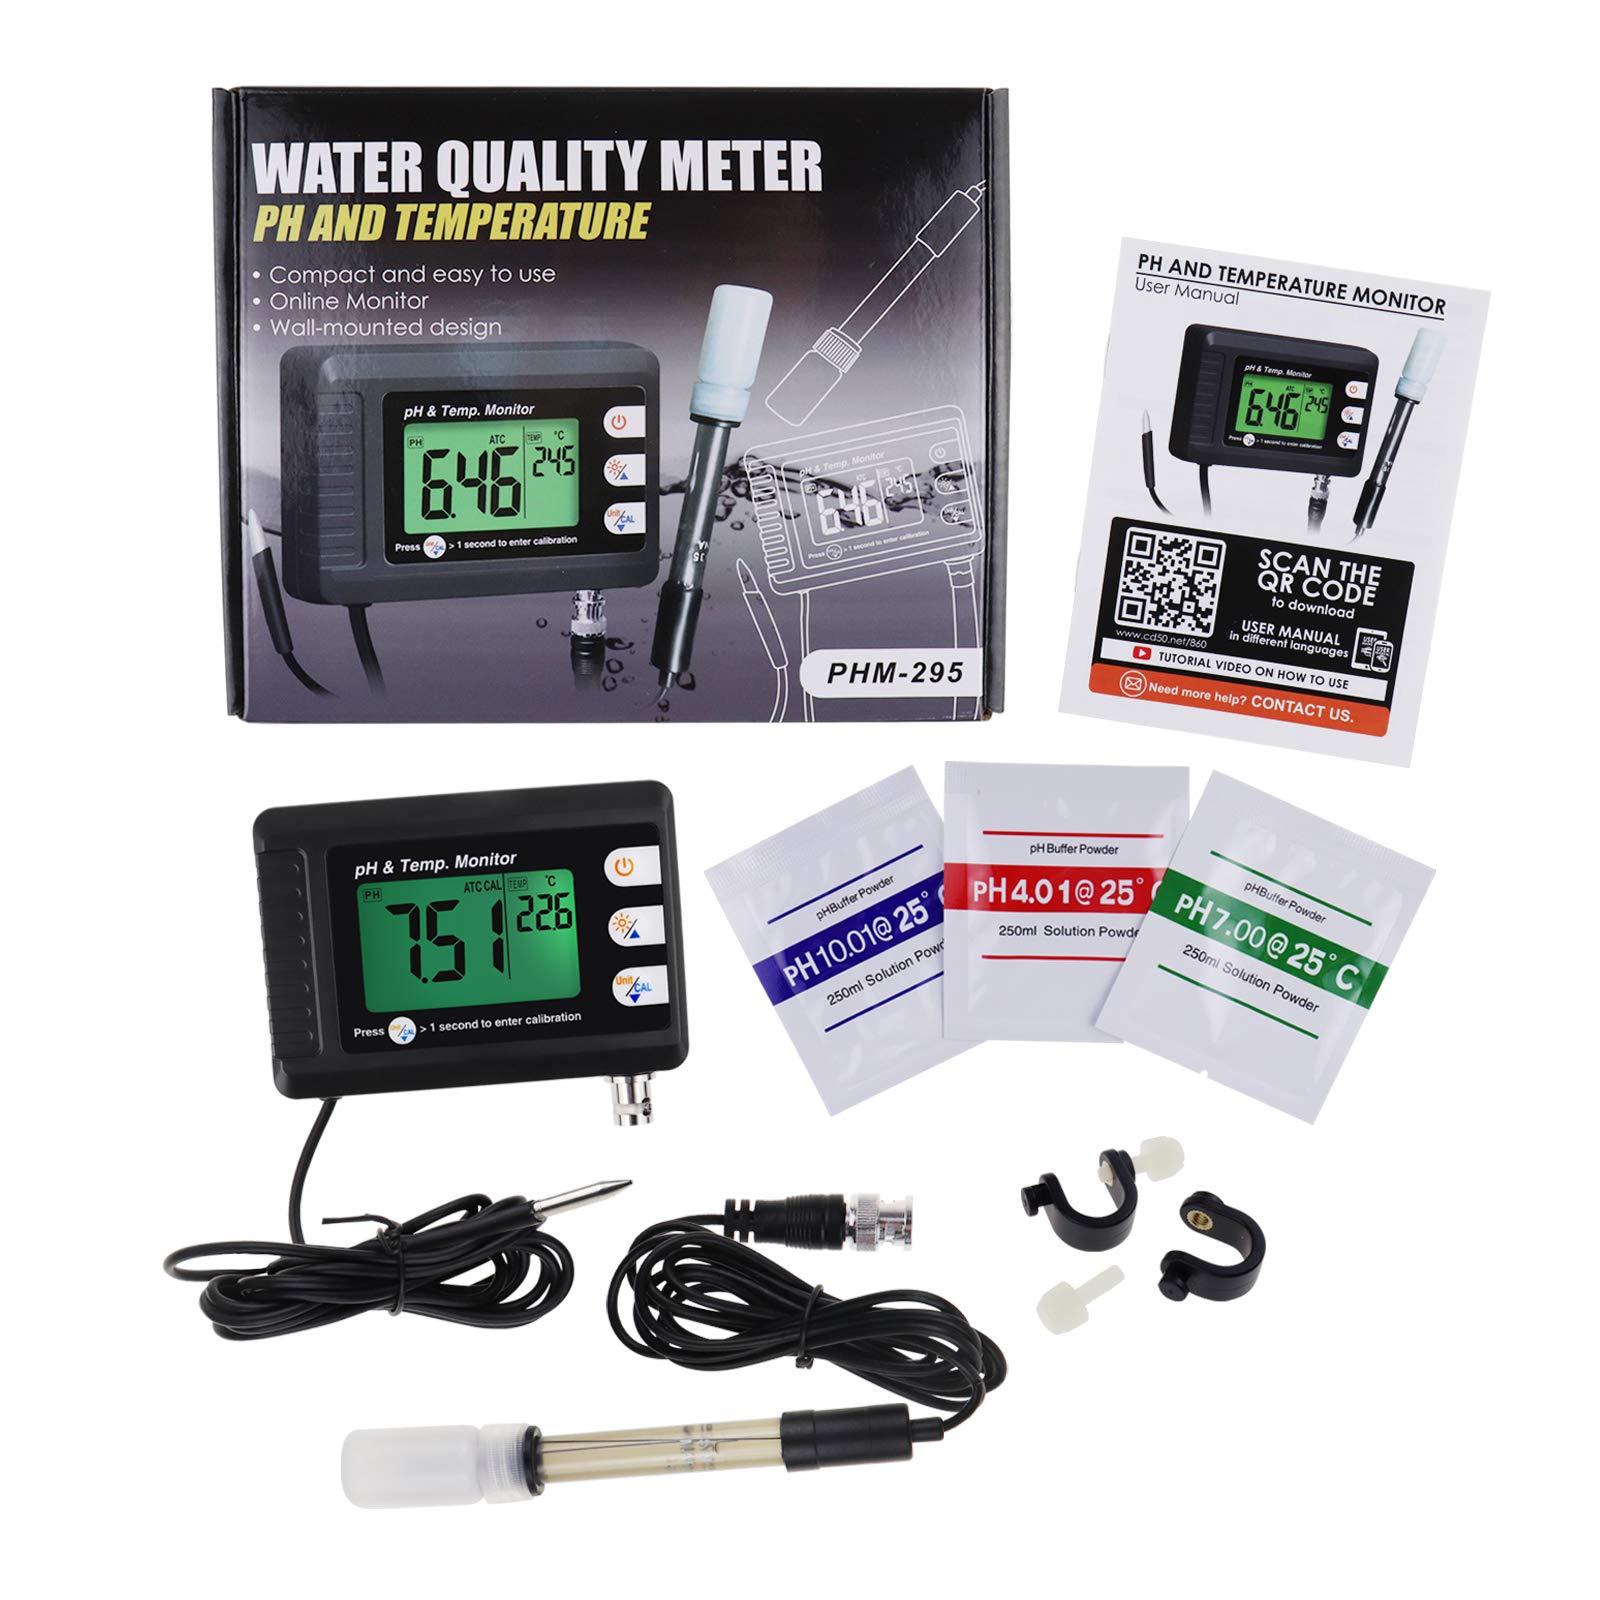 Digital Combo pH & Temperature Meter, Aquarium Thermometer pH Monitor with Automatic Calibration Function for Fish Tank Hydroponics Aquaculture Laboratory